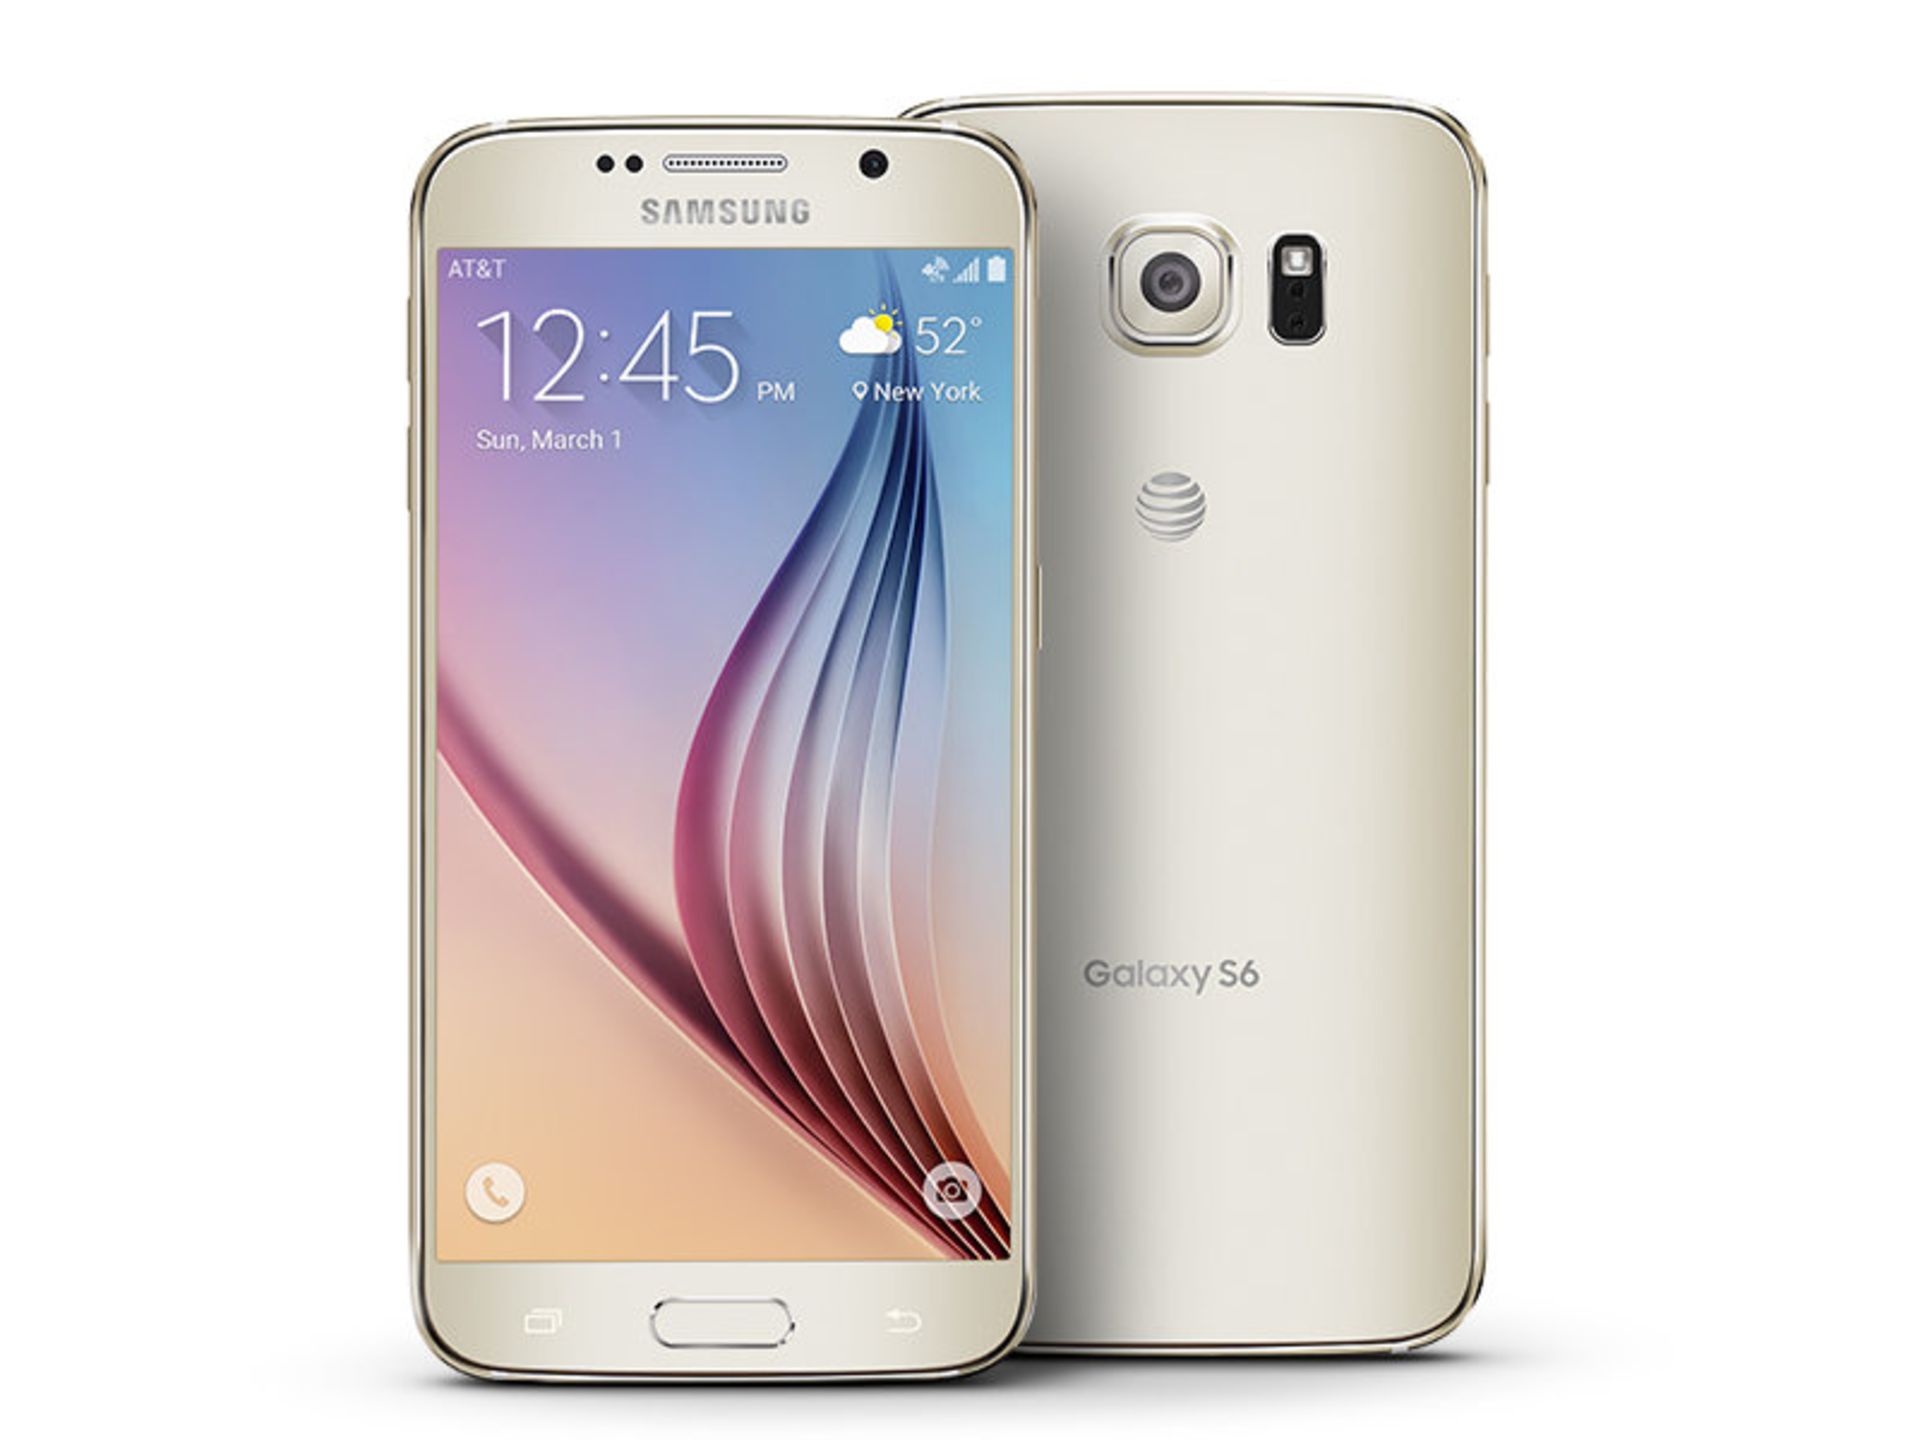 *TRADE QTY* Grade A Samsung Galaxy S6 Phone - 16MP Camera - 5.1" Screen - Boxed - Colours May